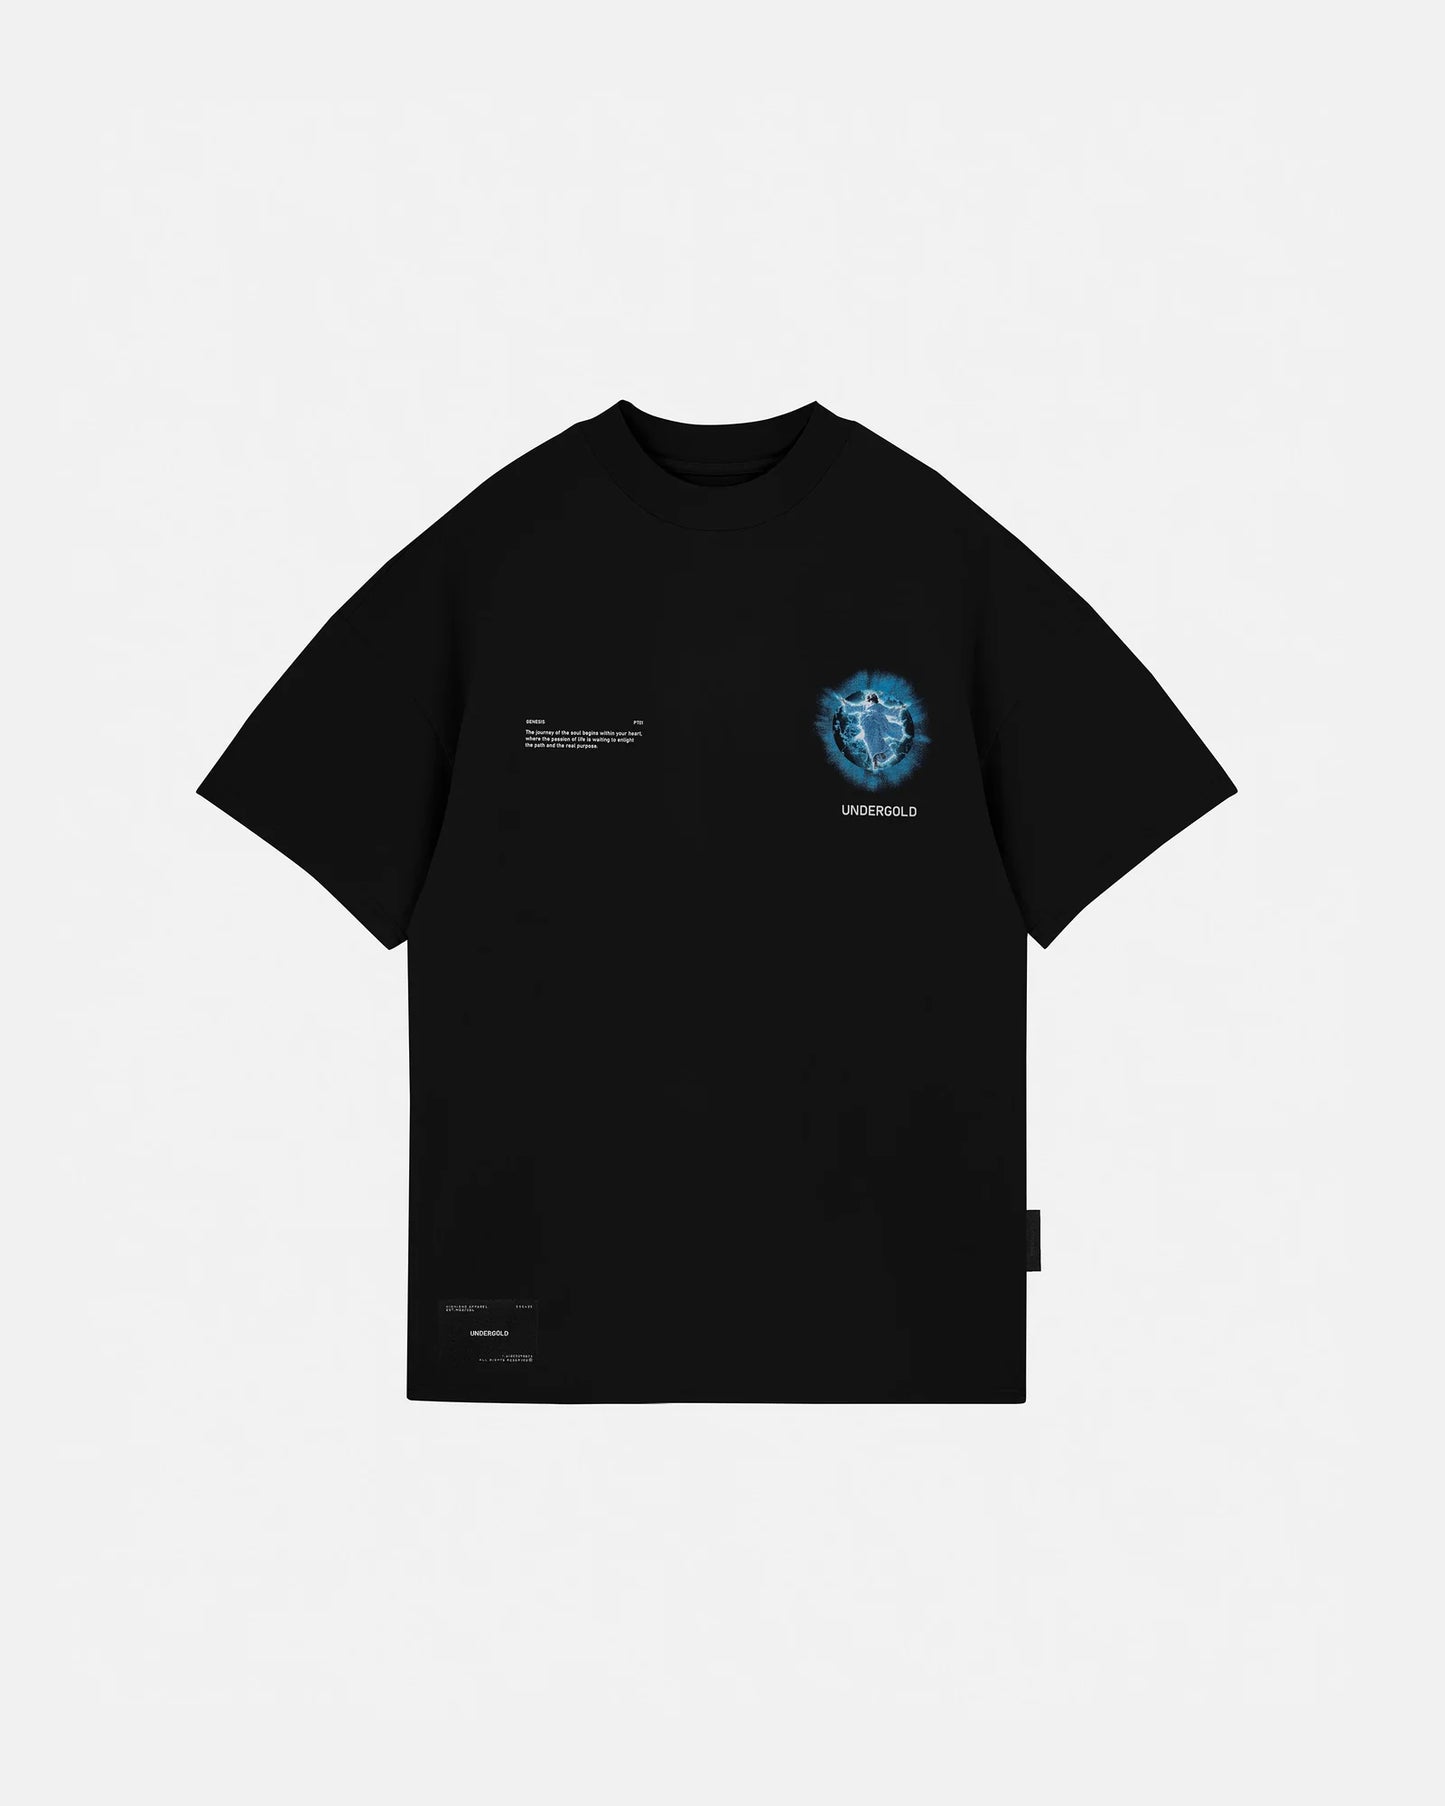 UNDERGOLD Genesis PT01 Savior T-shirt Black